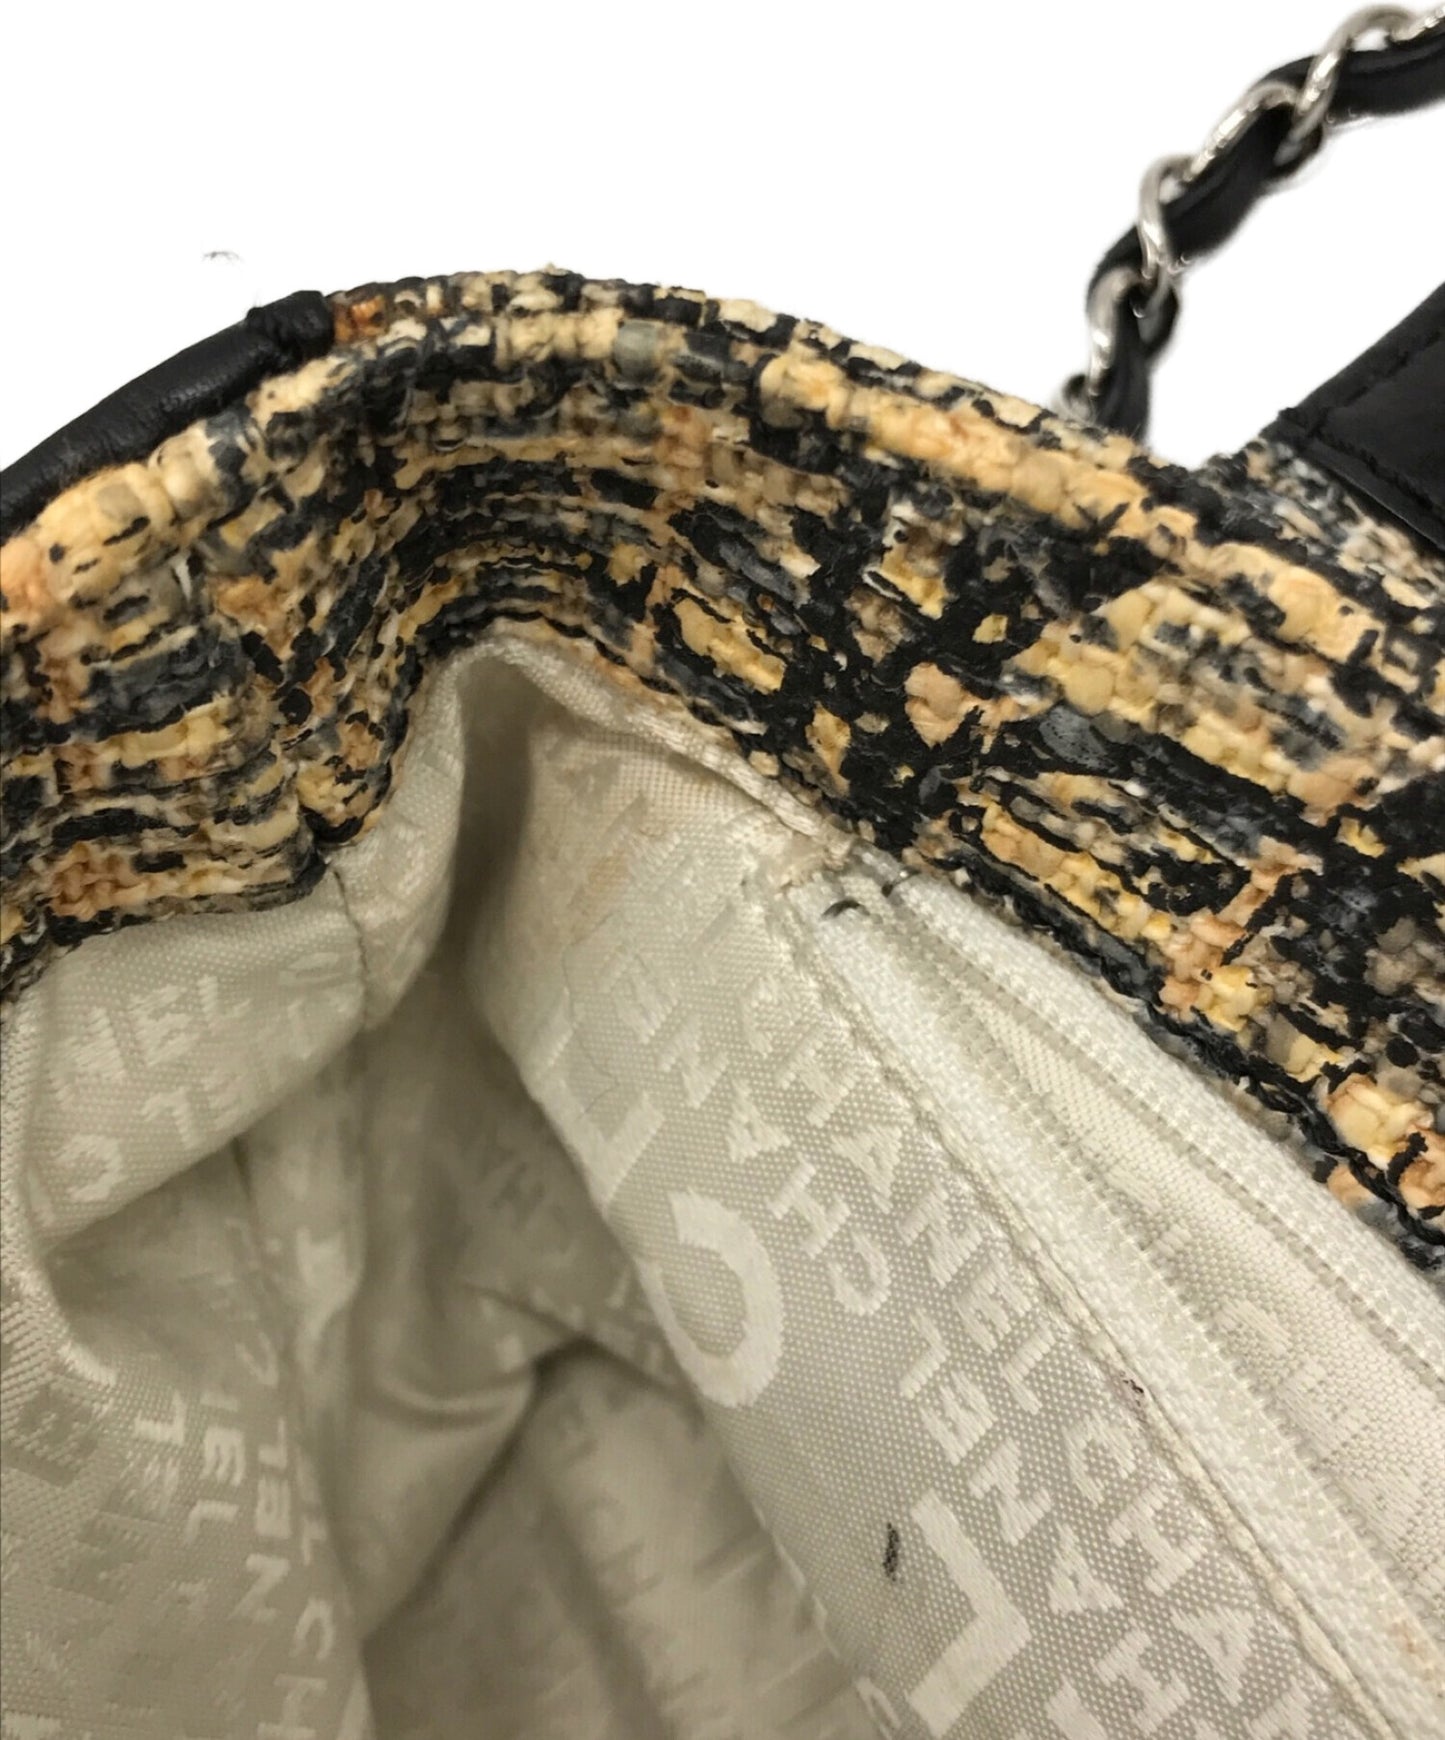 Chanel Iconic Print Tweed Chain Bag Bag 10363554